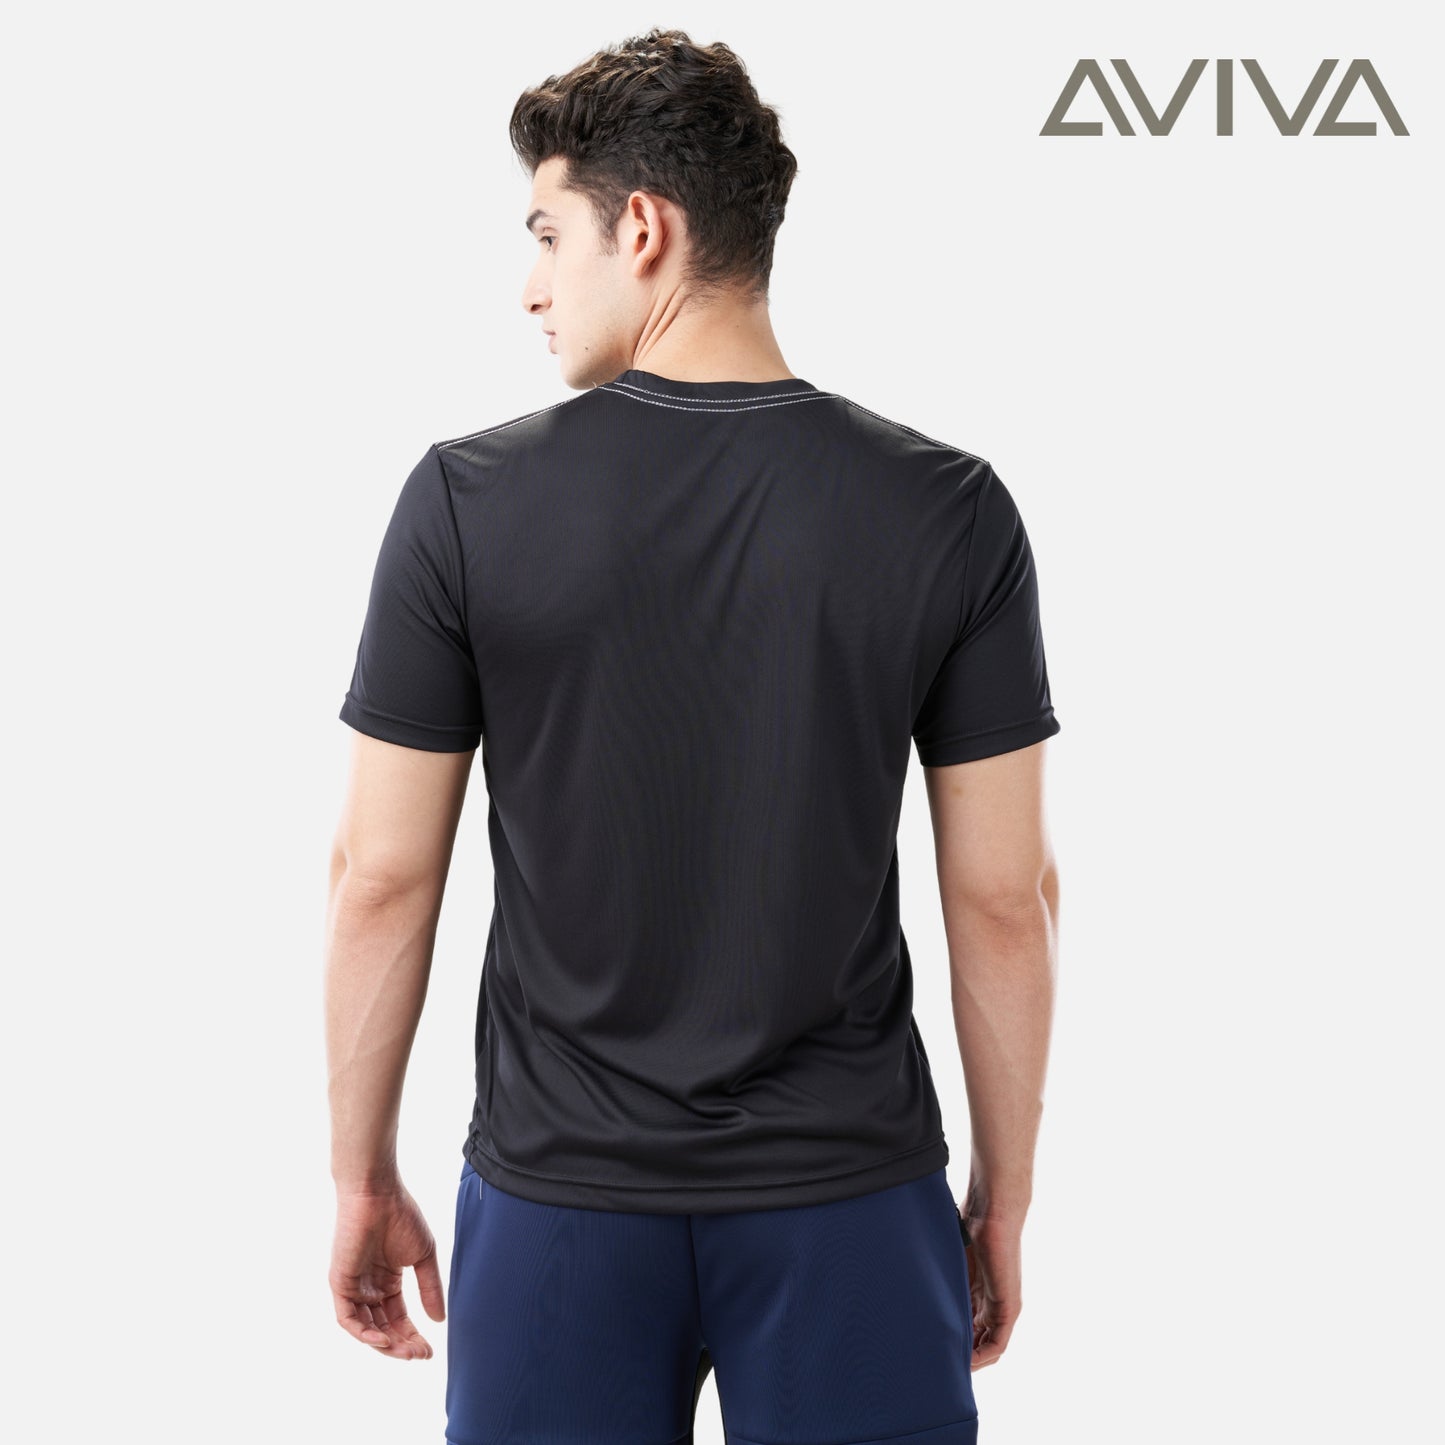 AVIVA Men's Graphic Short Sleeve Tee (91-8047)